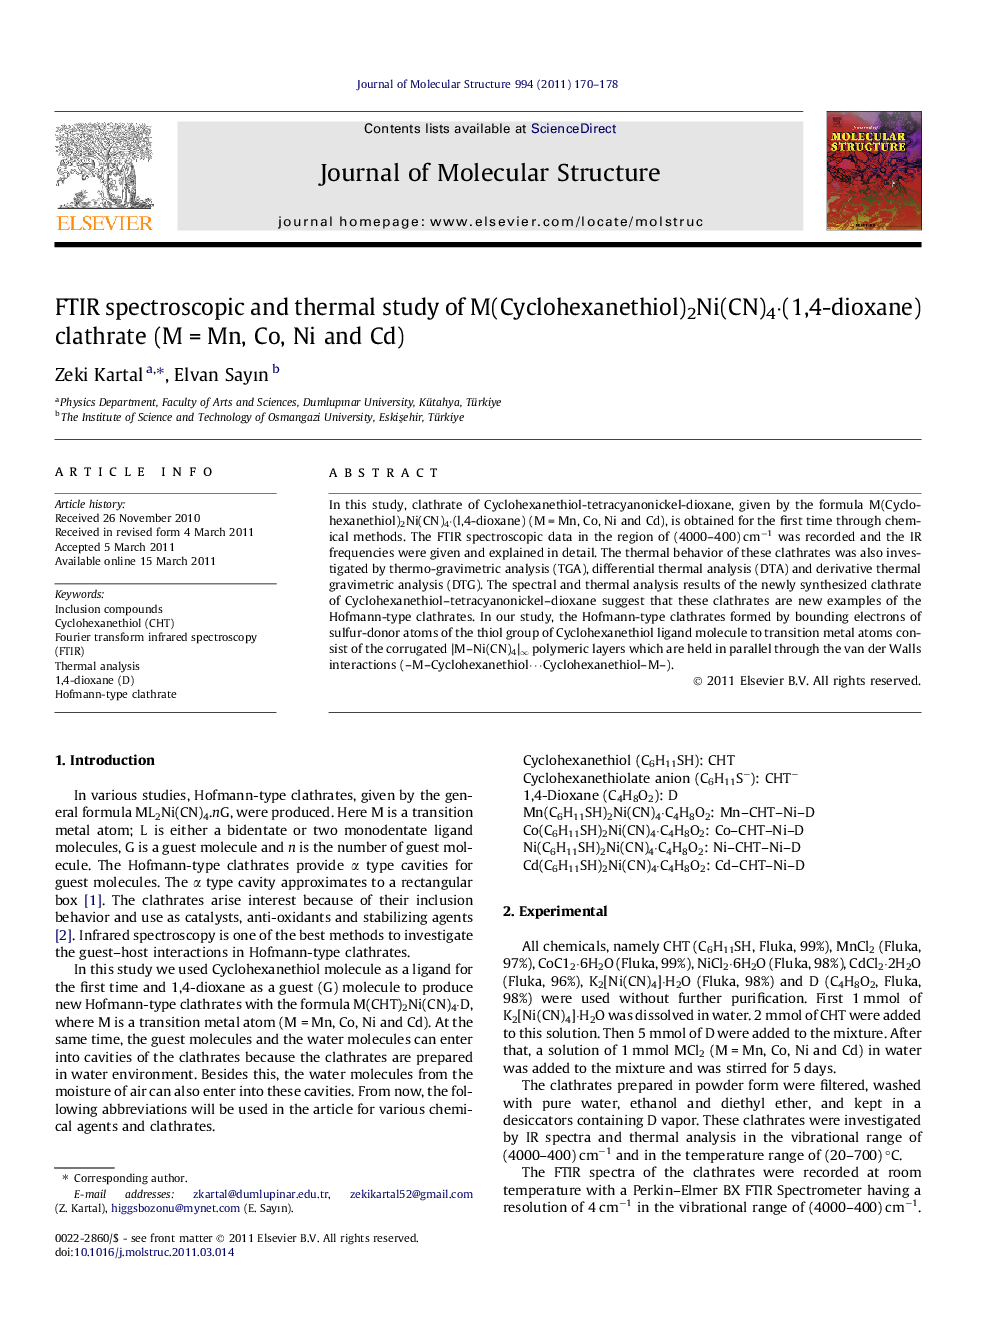 FTIR spectroscopic and thermal study of M(Cyclohexanethiol)2Ni(CN)4Â·(1,4-dioxane) clathrate (MÂ =Â Mn, Co, Ni and Cd)